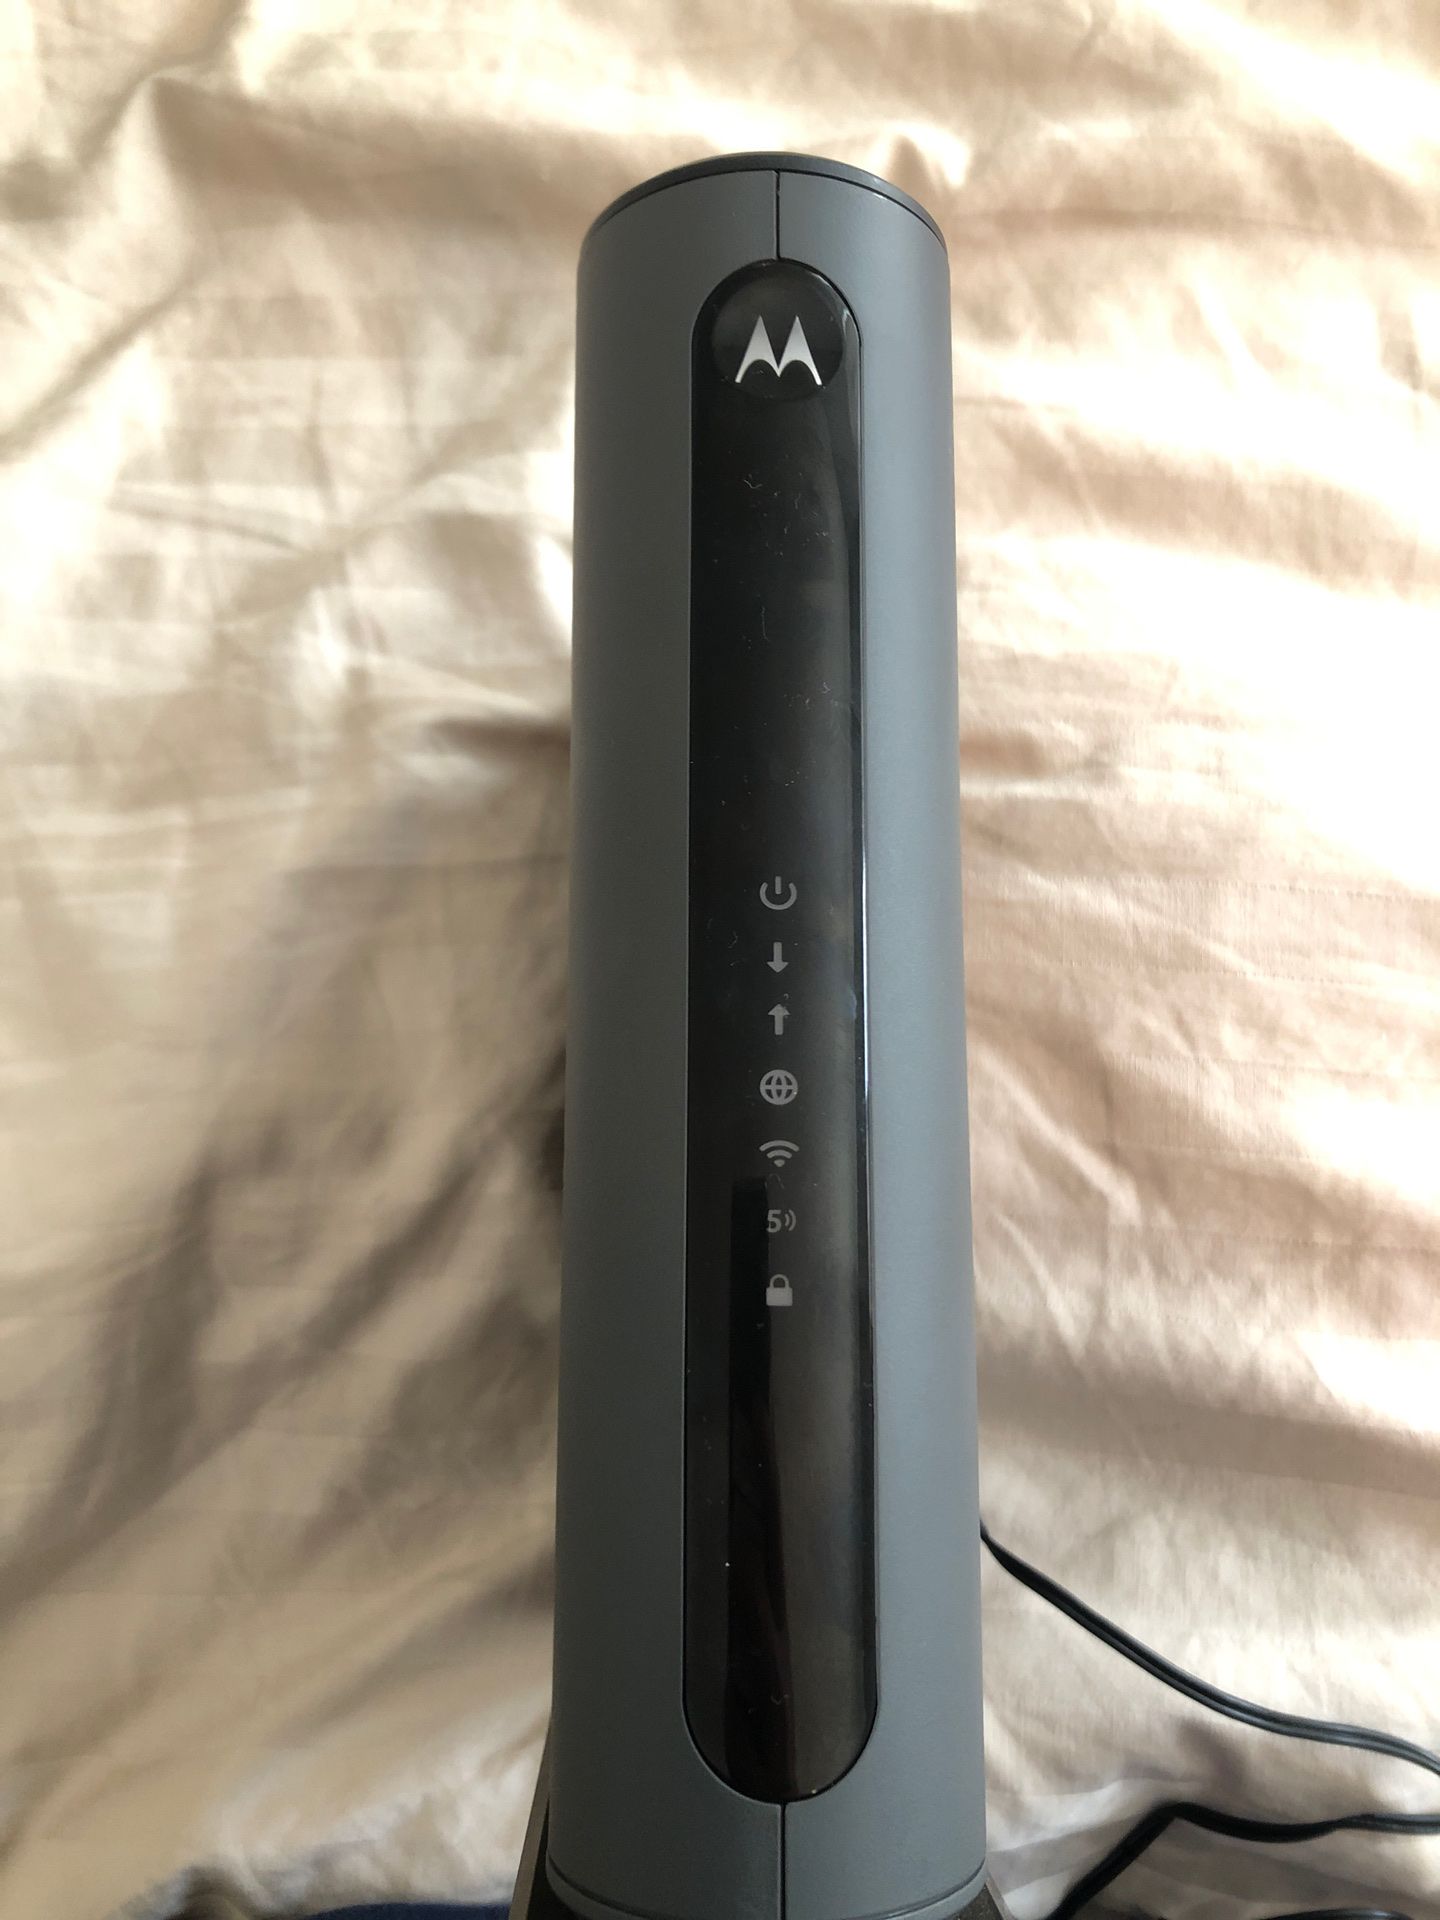 Motorola Cable Modem AC1900 Model: MG7550